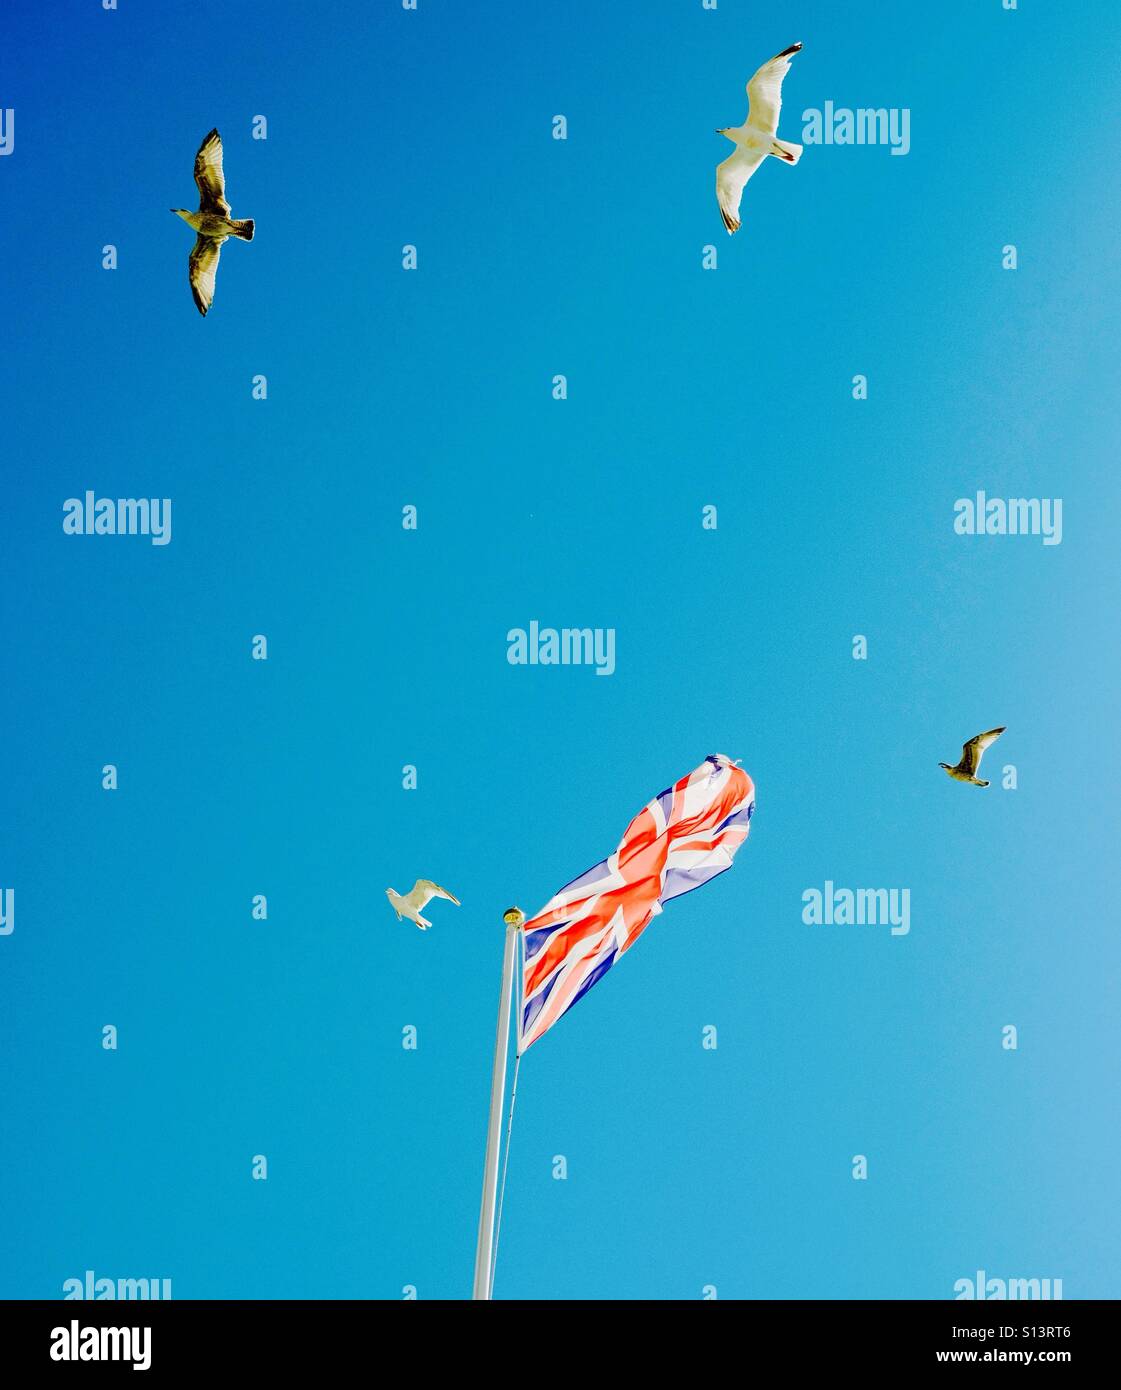 Seagulls circling a British Union Jack flag Stock Photo